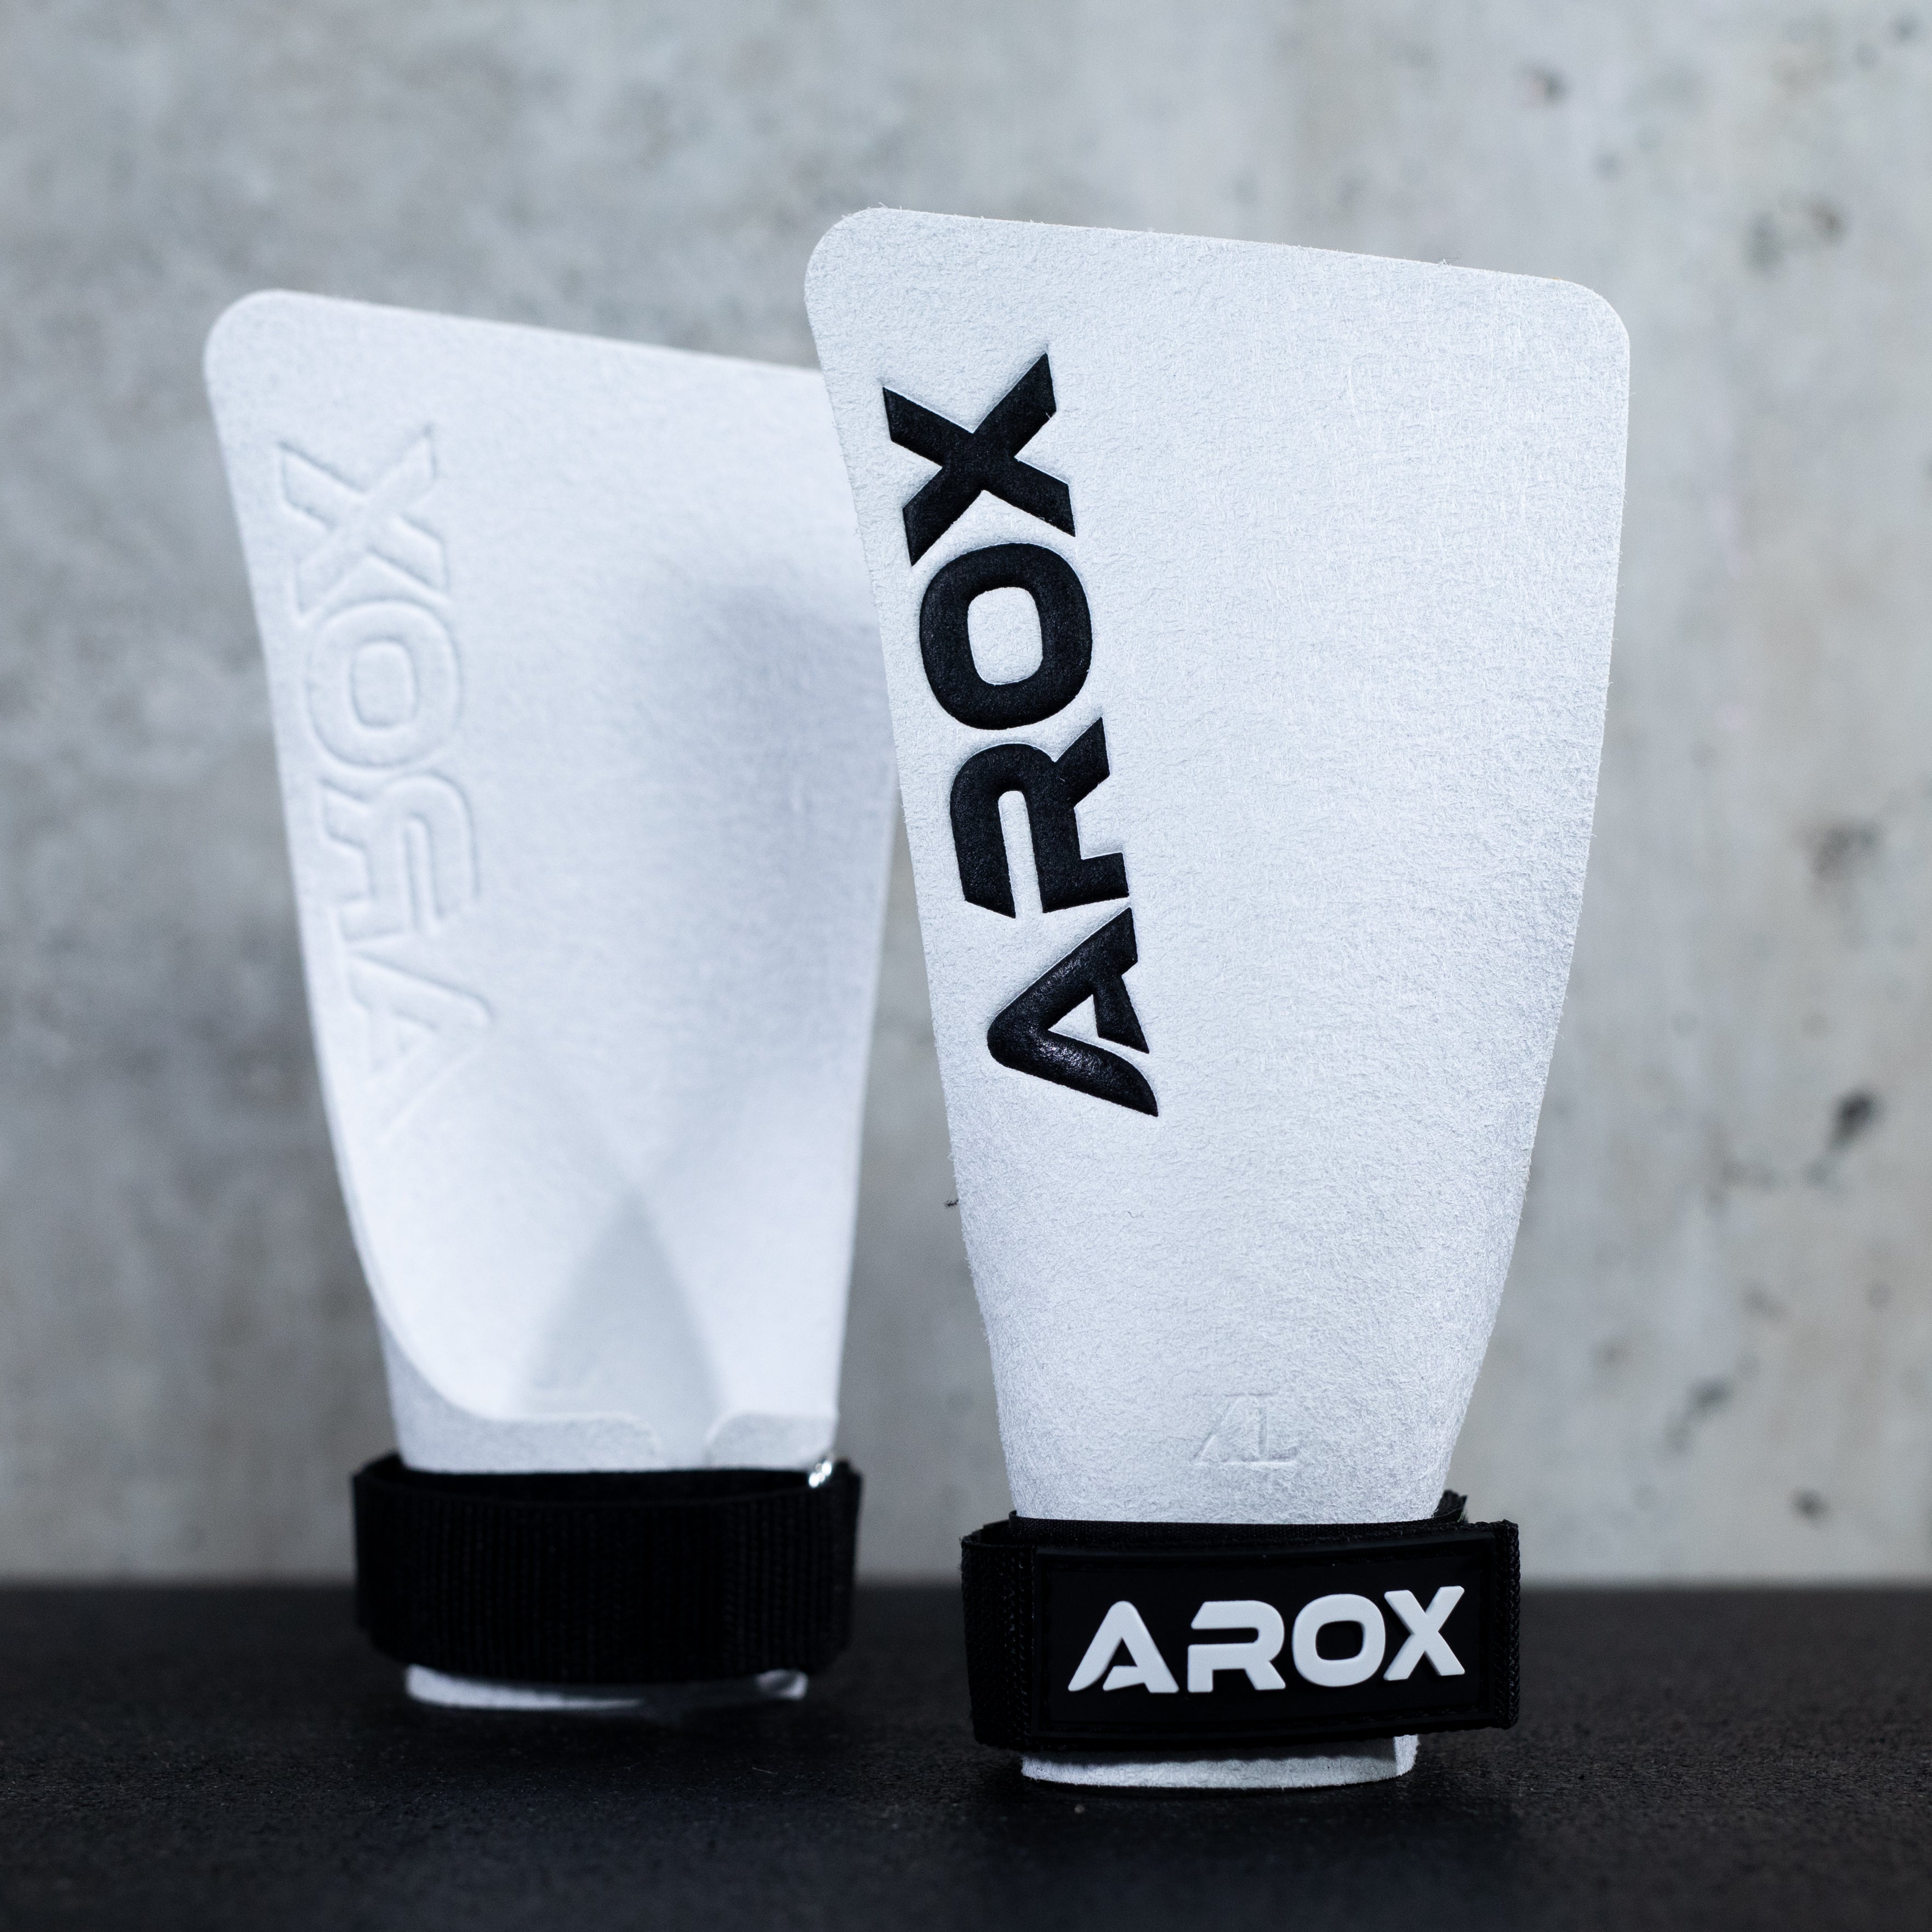 Arox - Endure grips